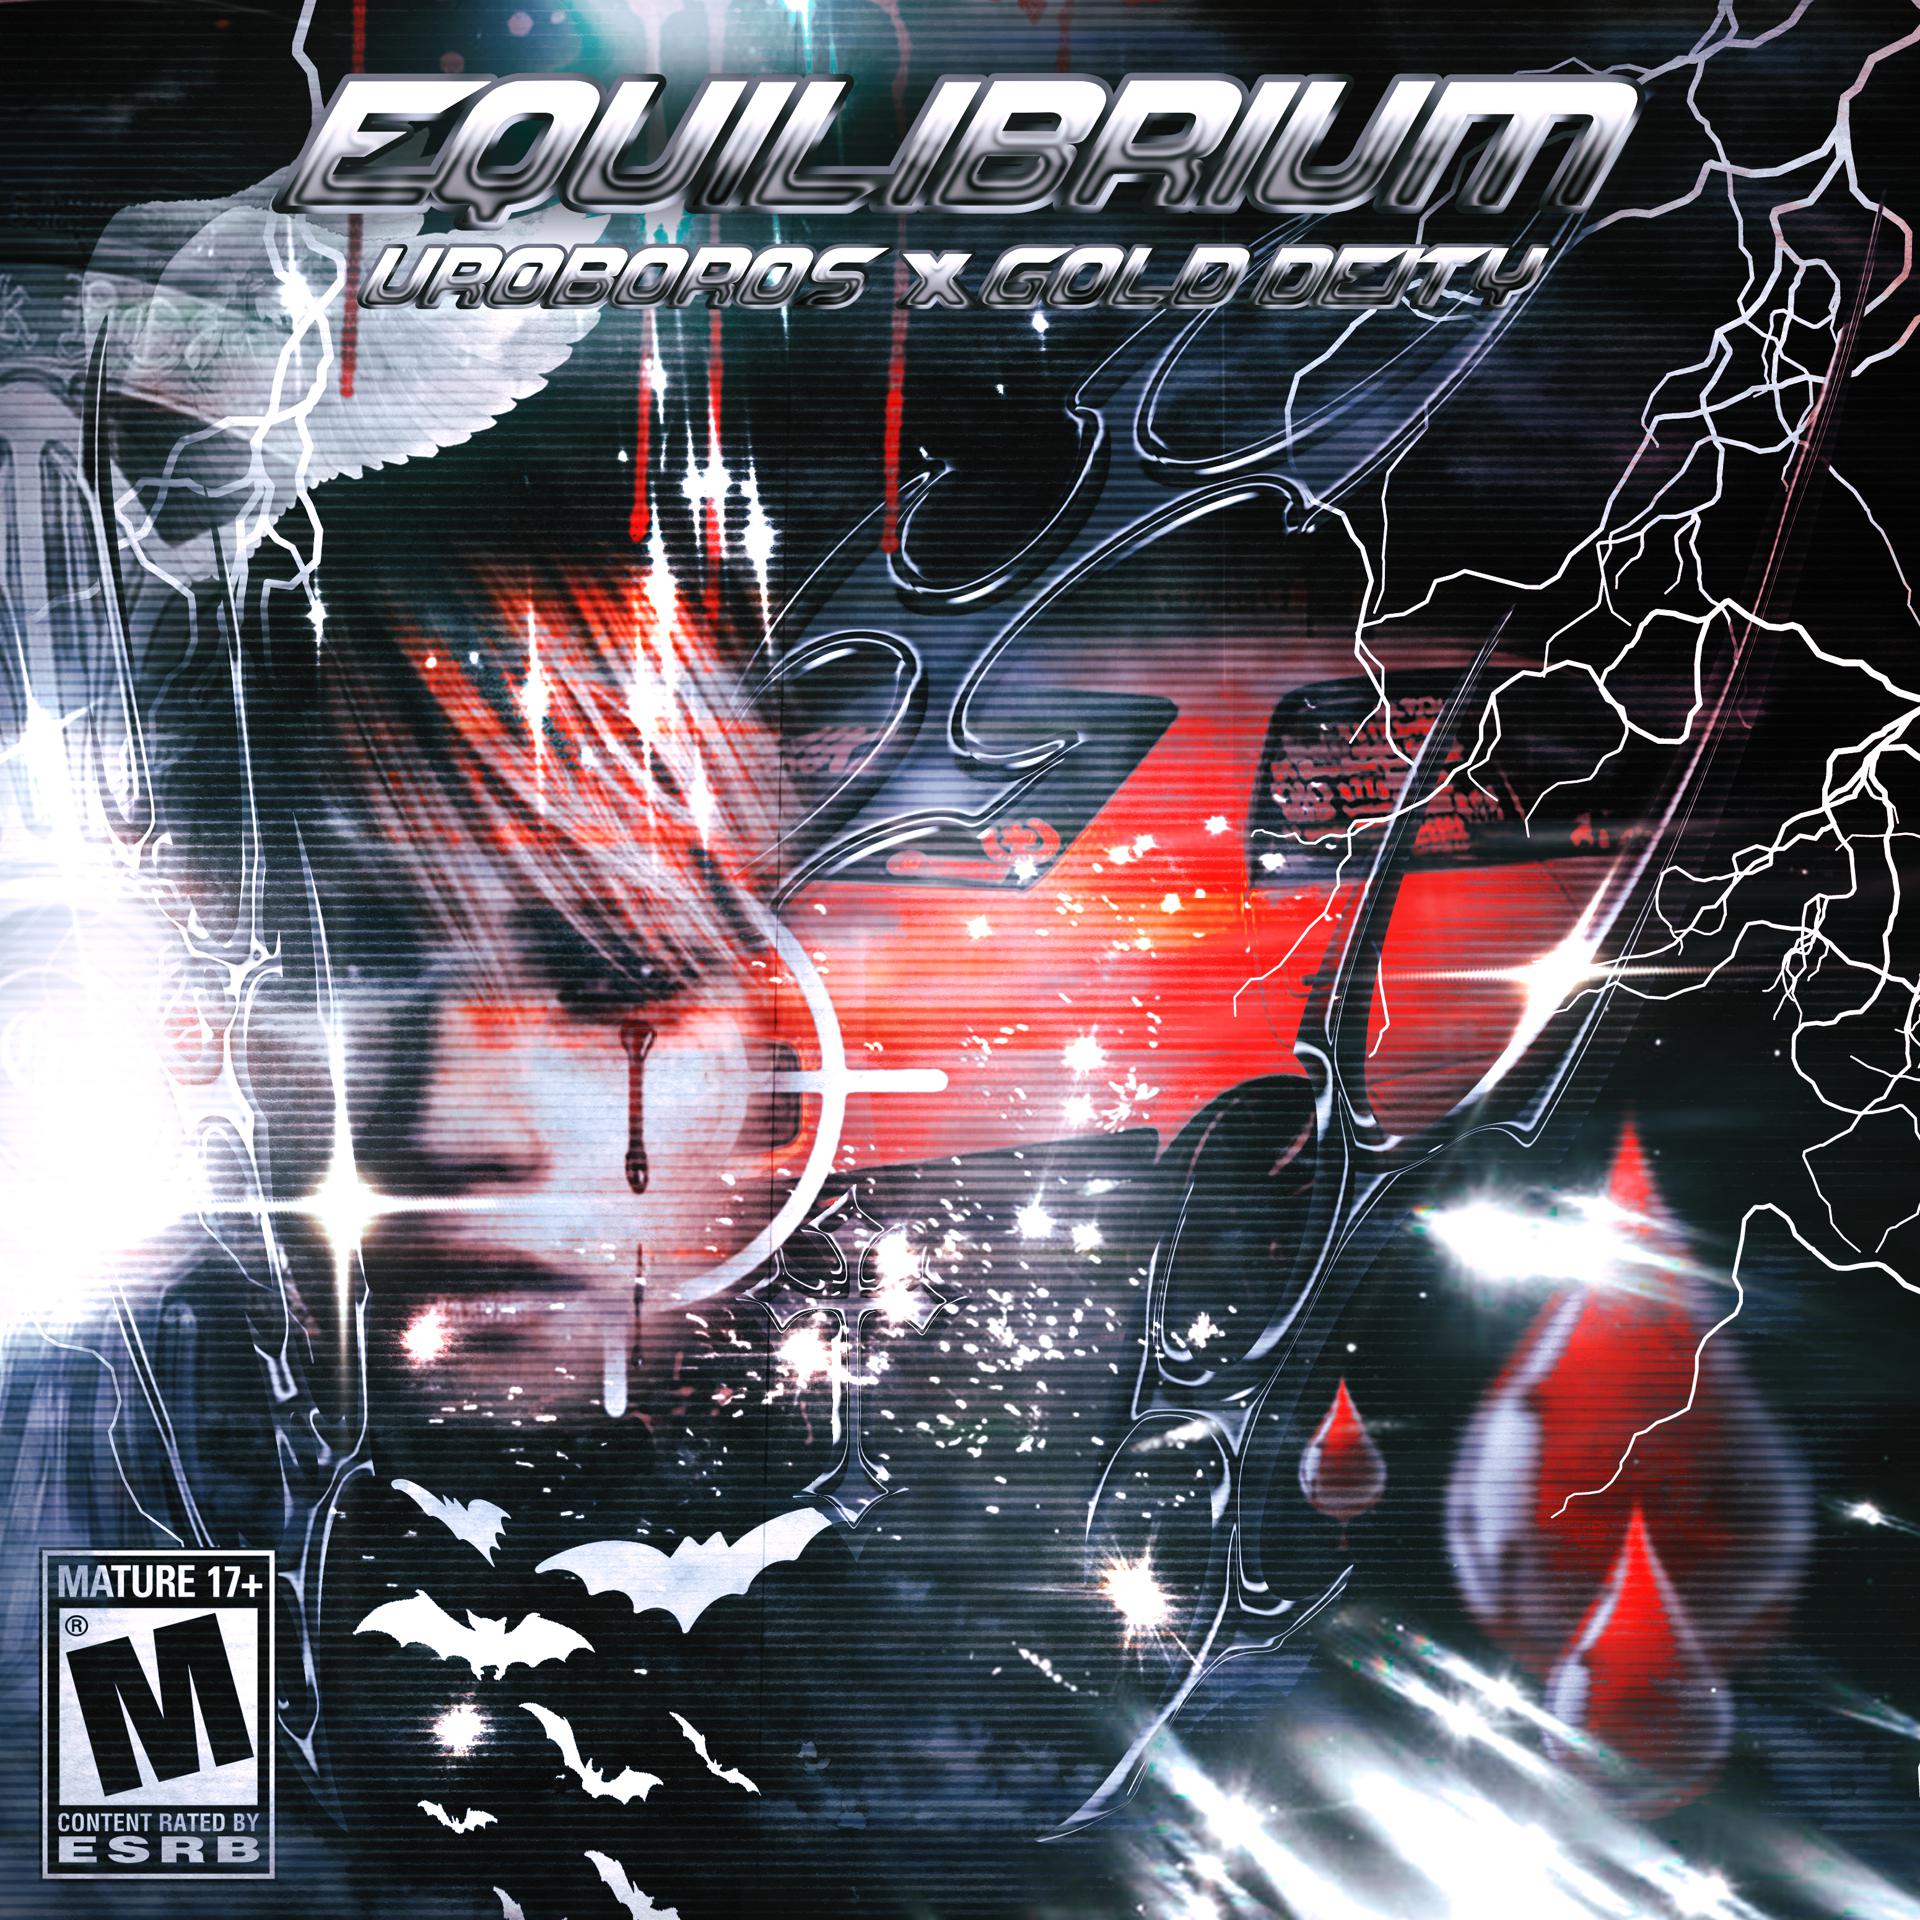 Постер альбома Equilibrium